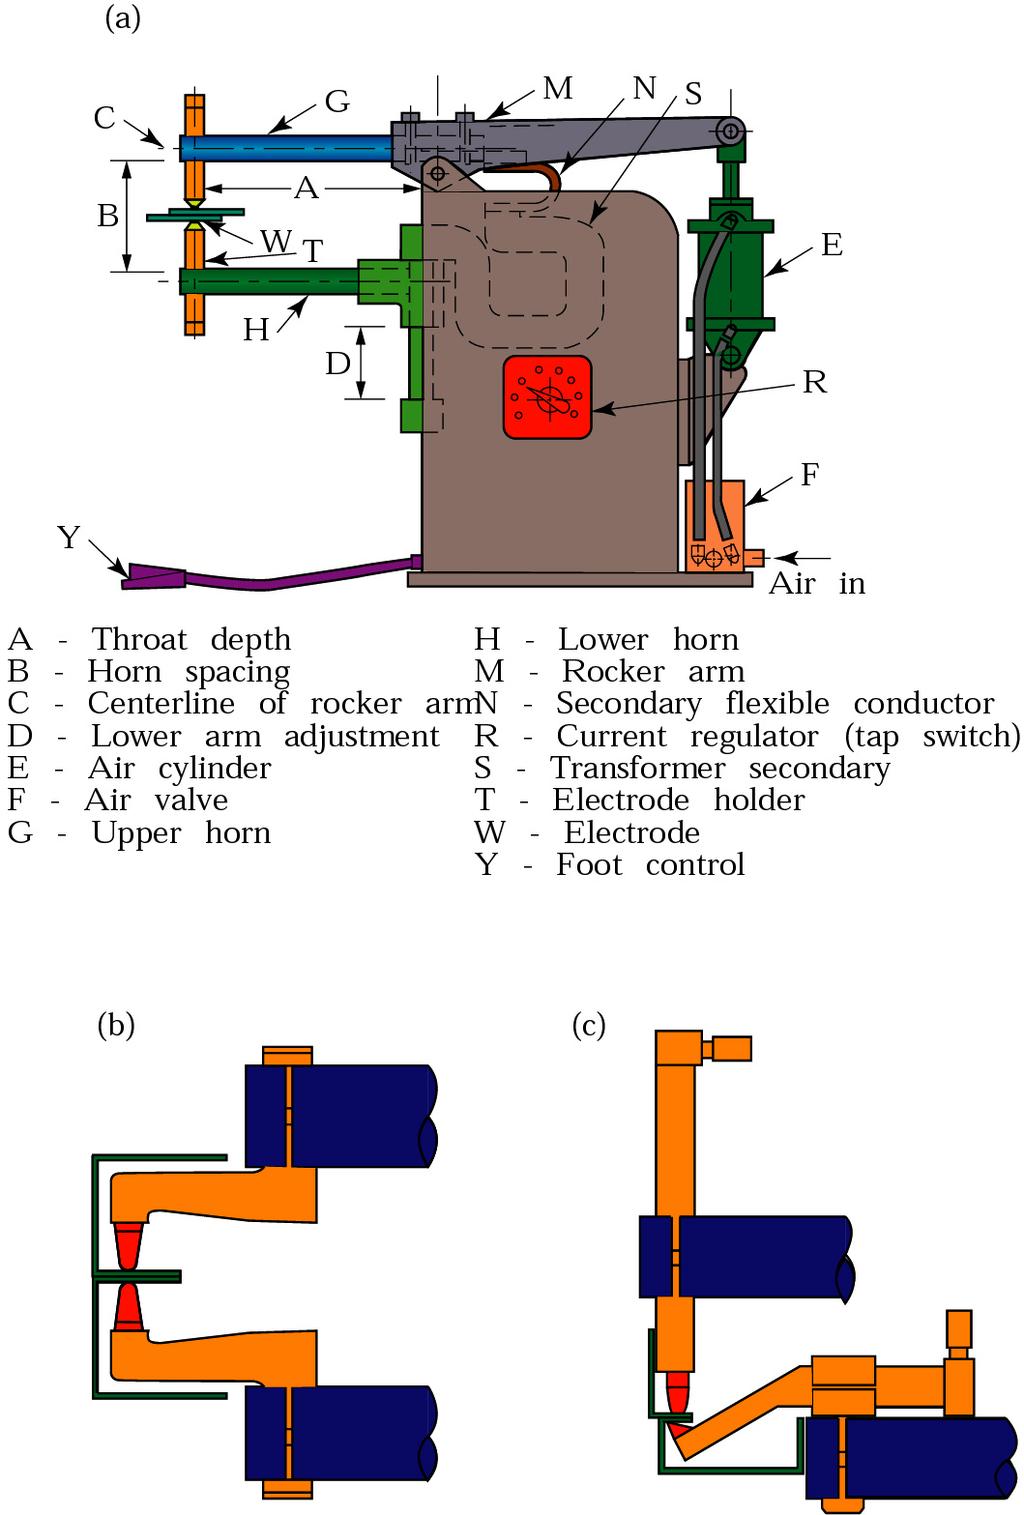 Welding Machine Design Figure 28.6 (a) Schematic illustration of an air-operated rocker-arm spotwelding machine. Source: American Welding Society.